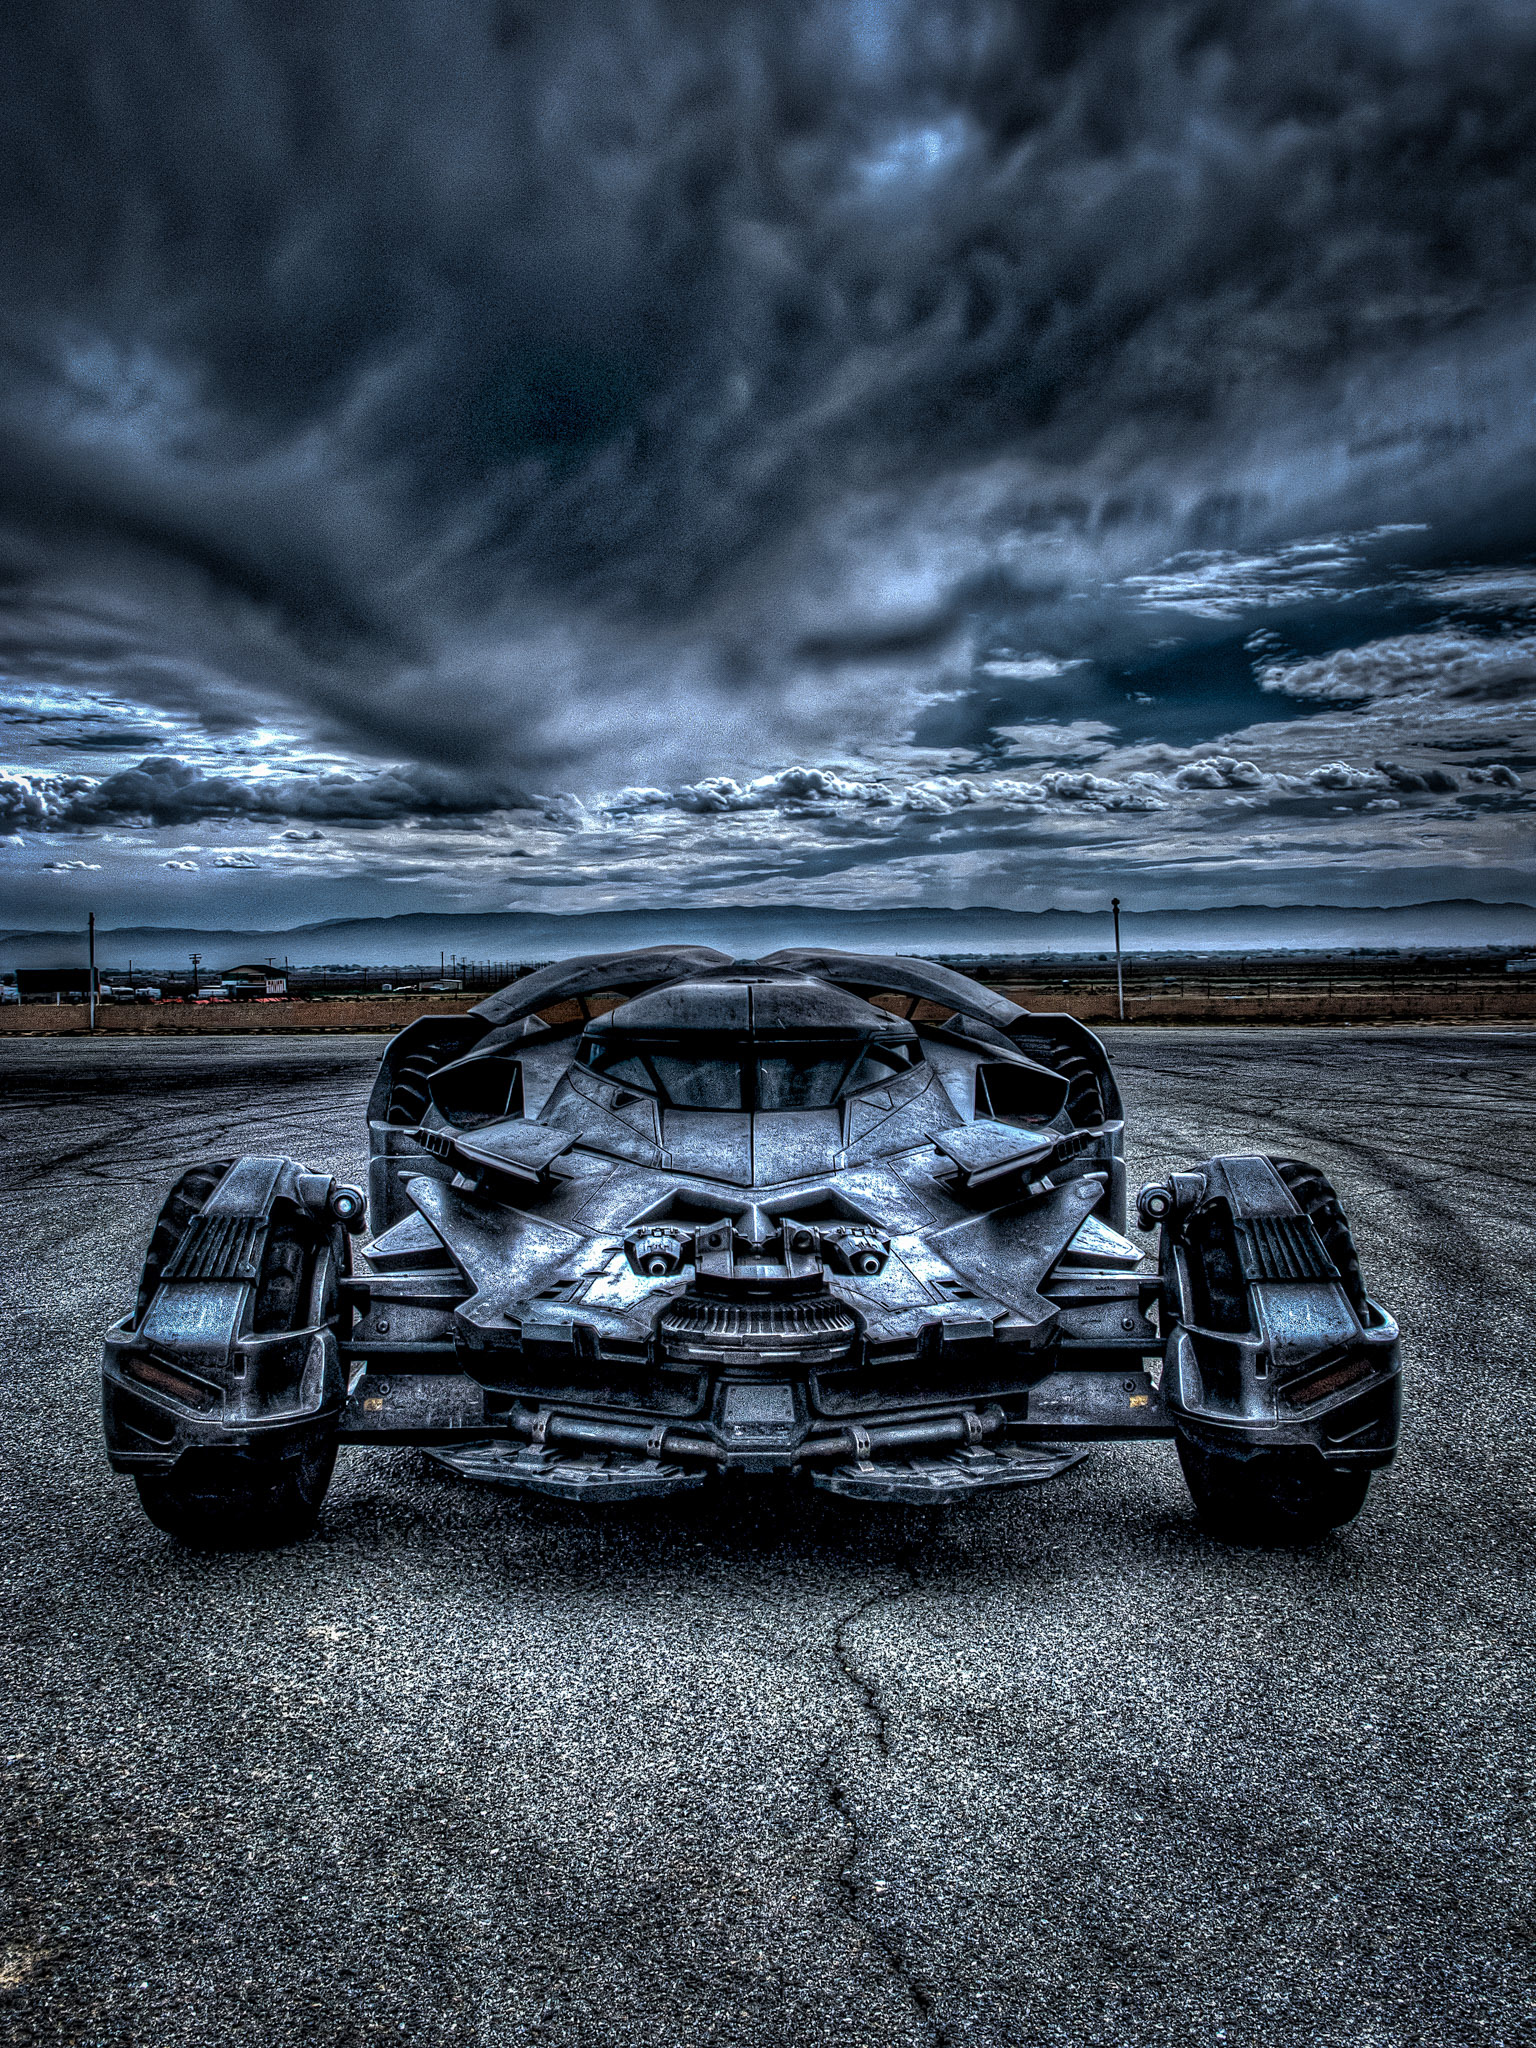 Jonathan Gaines Photography - The Batmobile